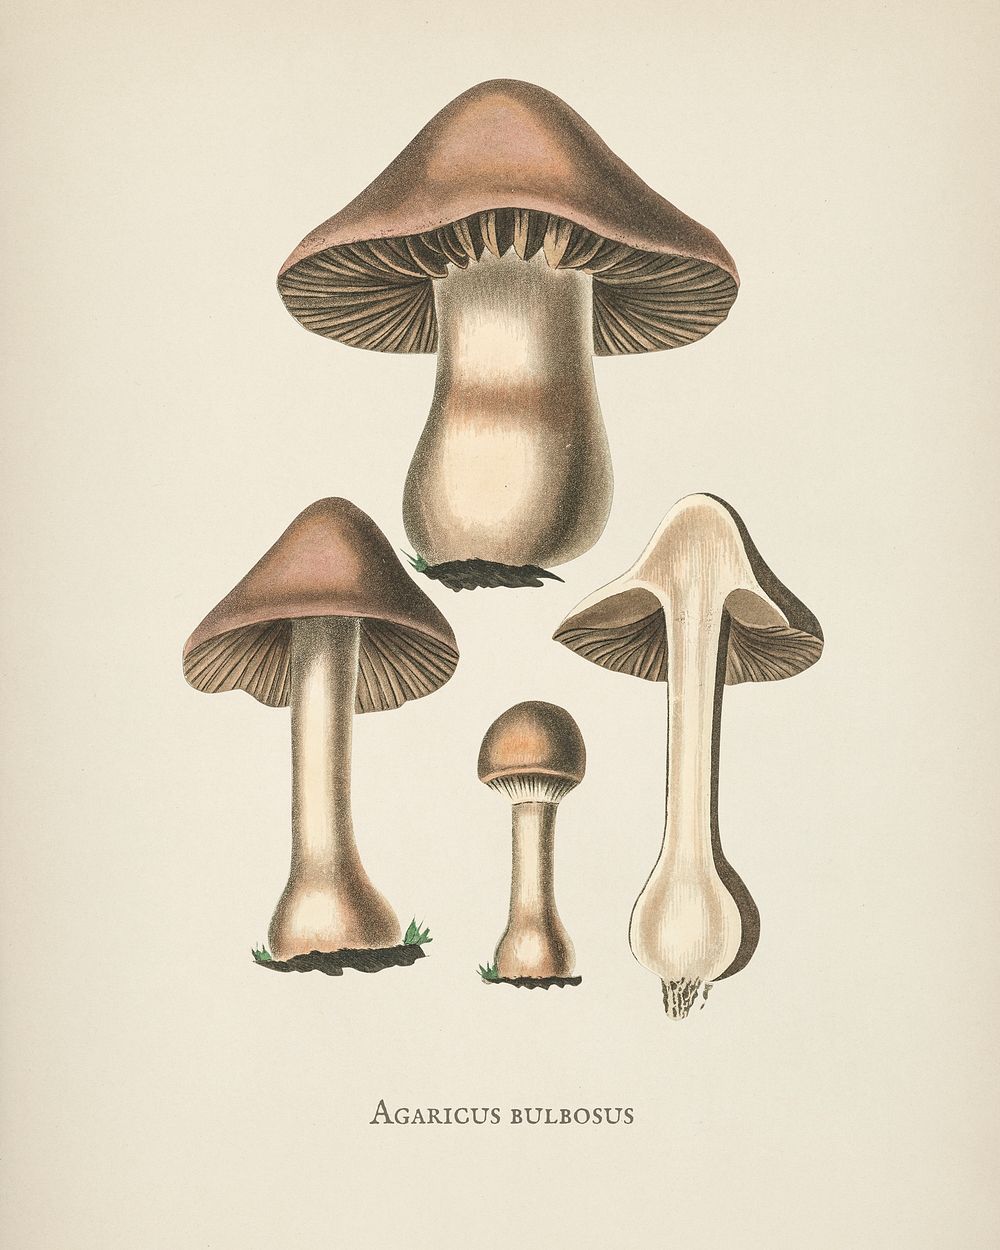 Agaricus bulbosus illustration from Medical Botany (1836) by John Stephenson and James Morss Churchill.